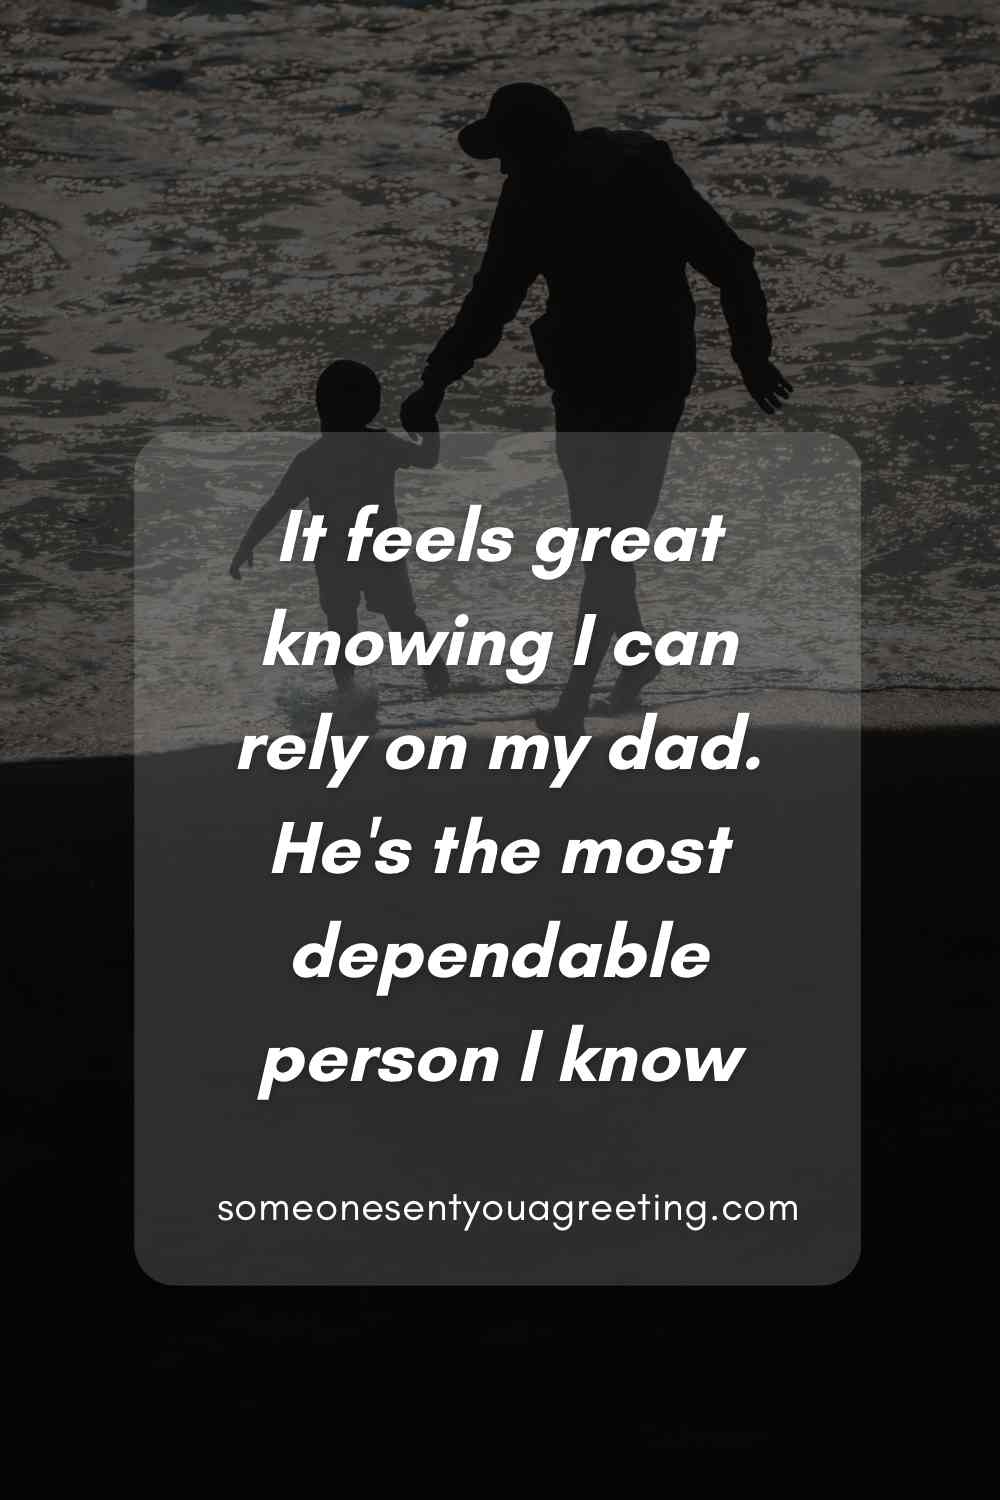 quote to describe dad